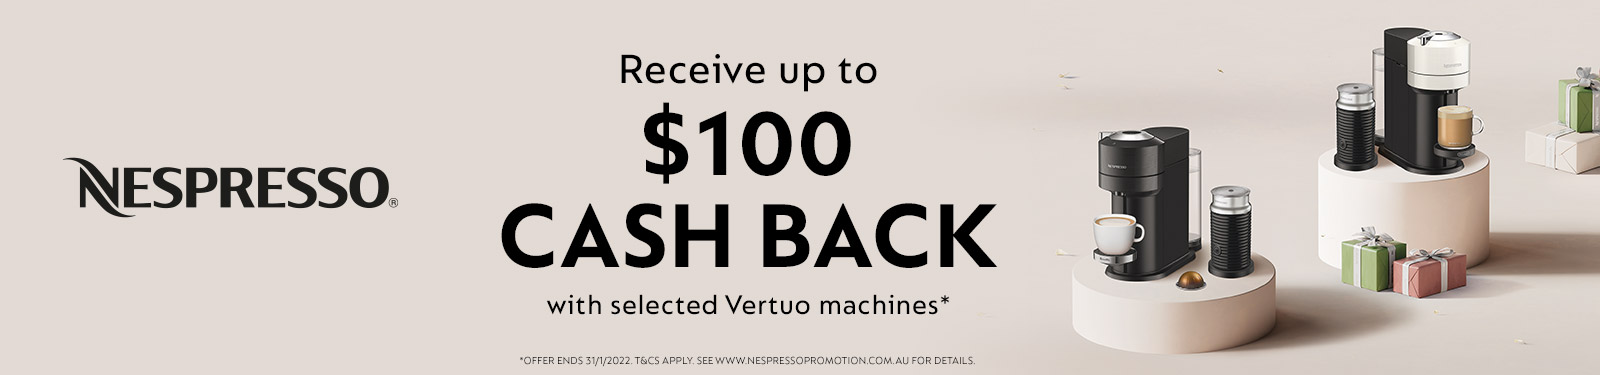 Receive up to $100 cashback on Nespresso Vertuo Machines